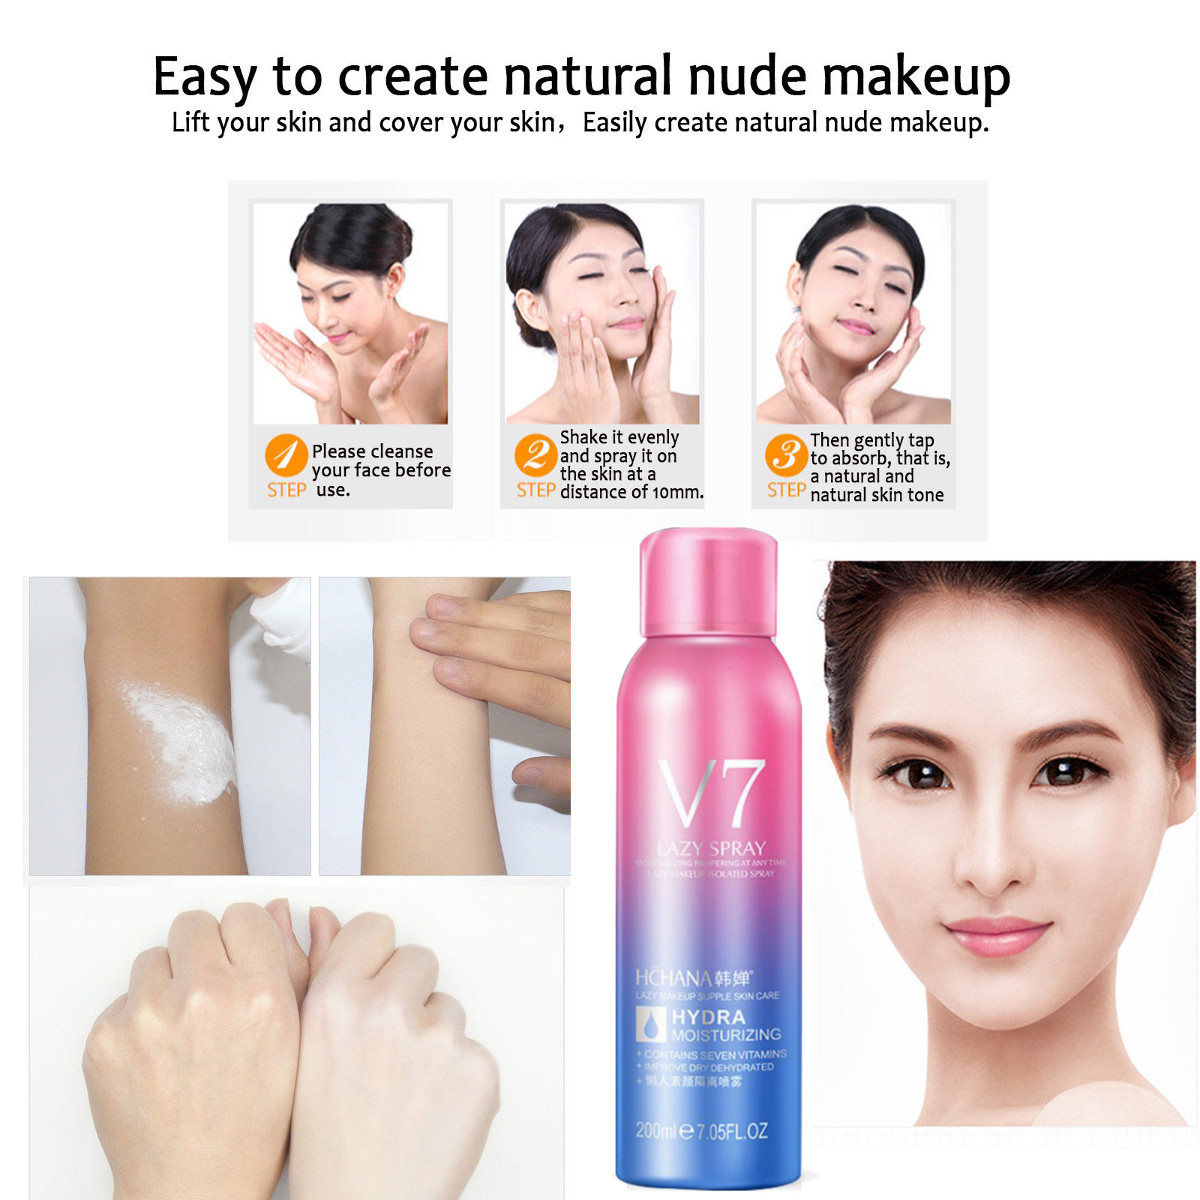 200ml-V7-Skin-Whitening-Cream-Tone-Up-Lazy-Spray-Moisturize-Face-Body-Concealer-1350691